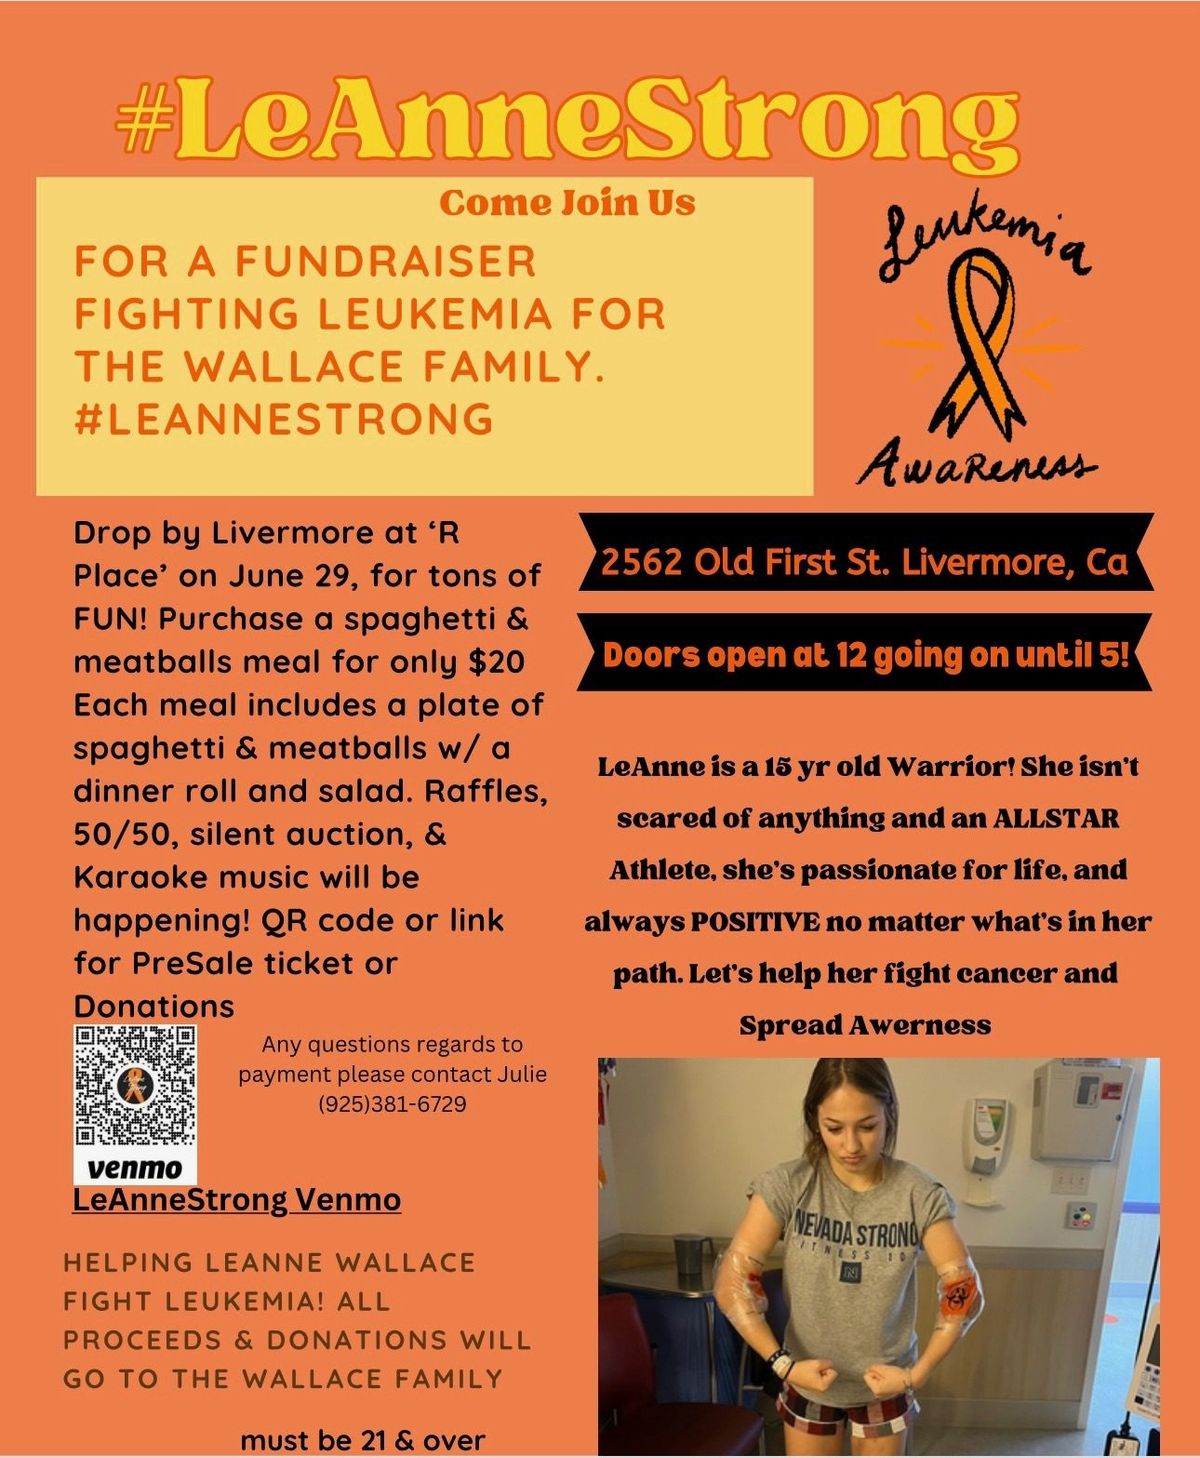 Wallace Family Fundraiser for LeAnne battle against leukemia